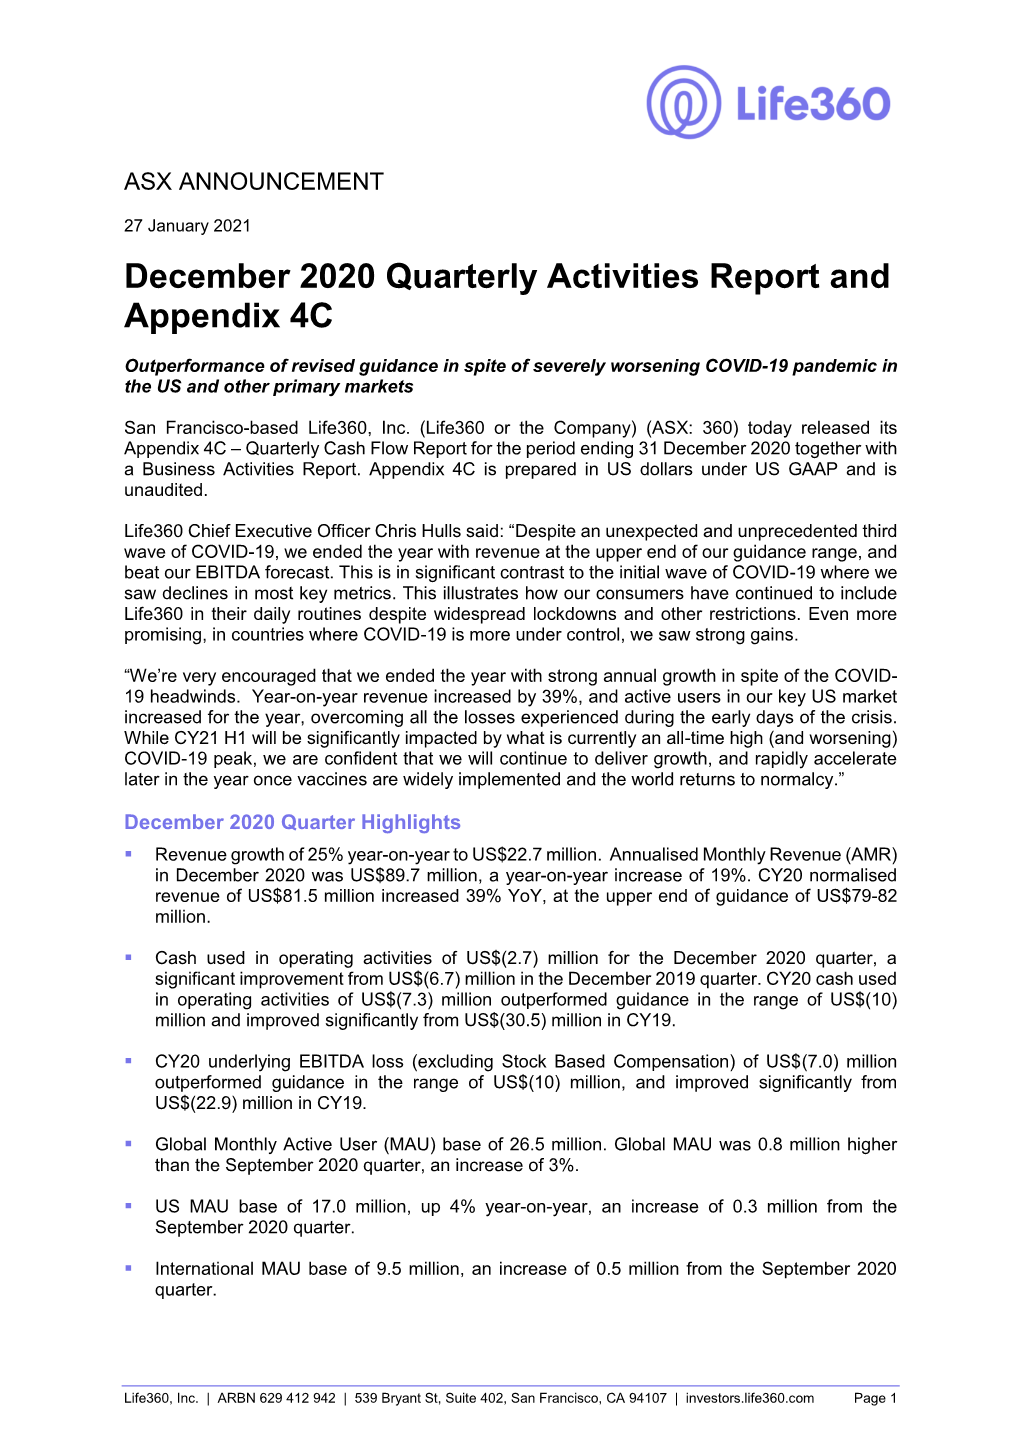 December 2020 Quarterly Activities Report and Appendix 4C